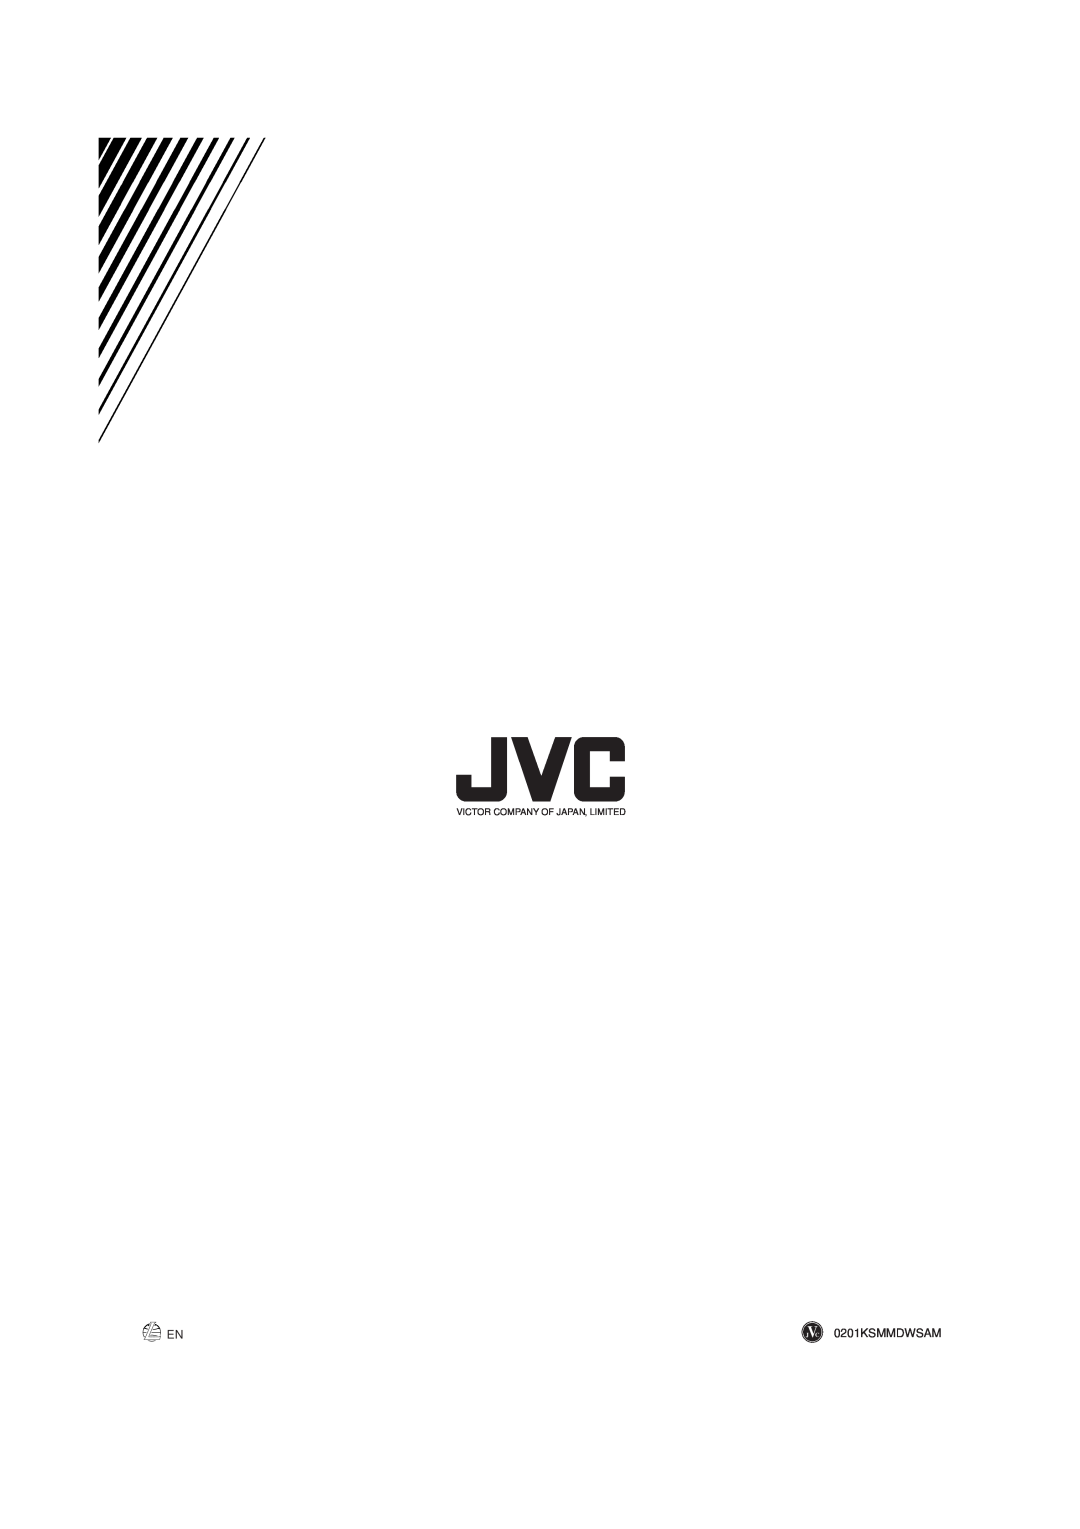 JVC CA-MXG51R manual 0201KSMMDWSAM, Victor Company Of Japan, Limited 